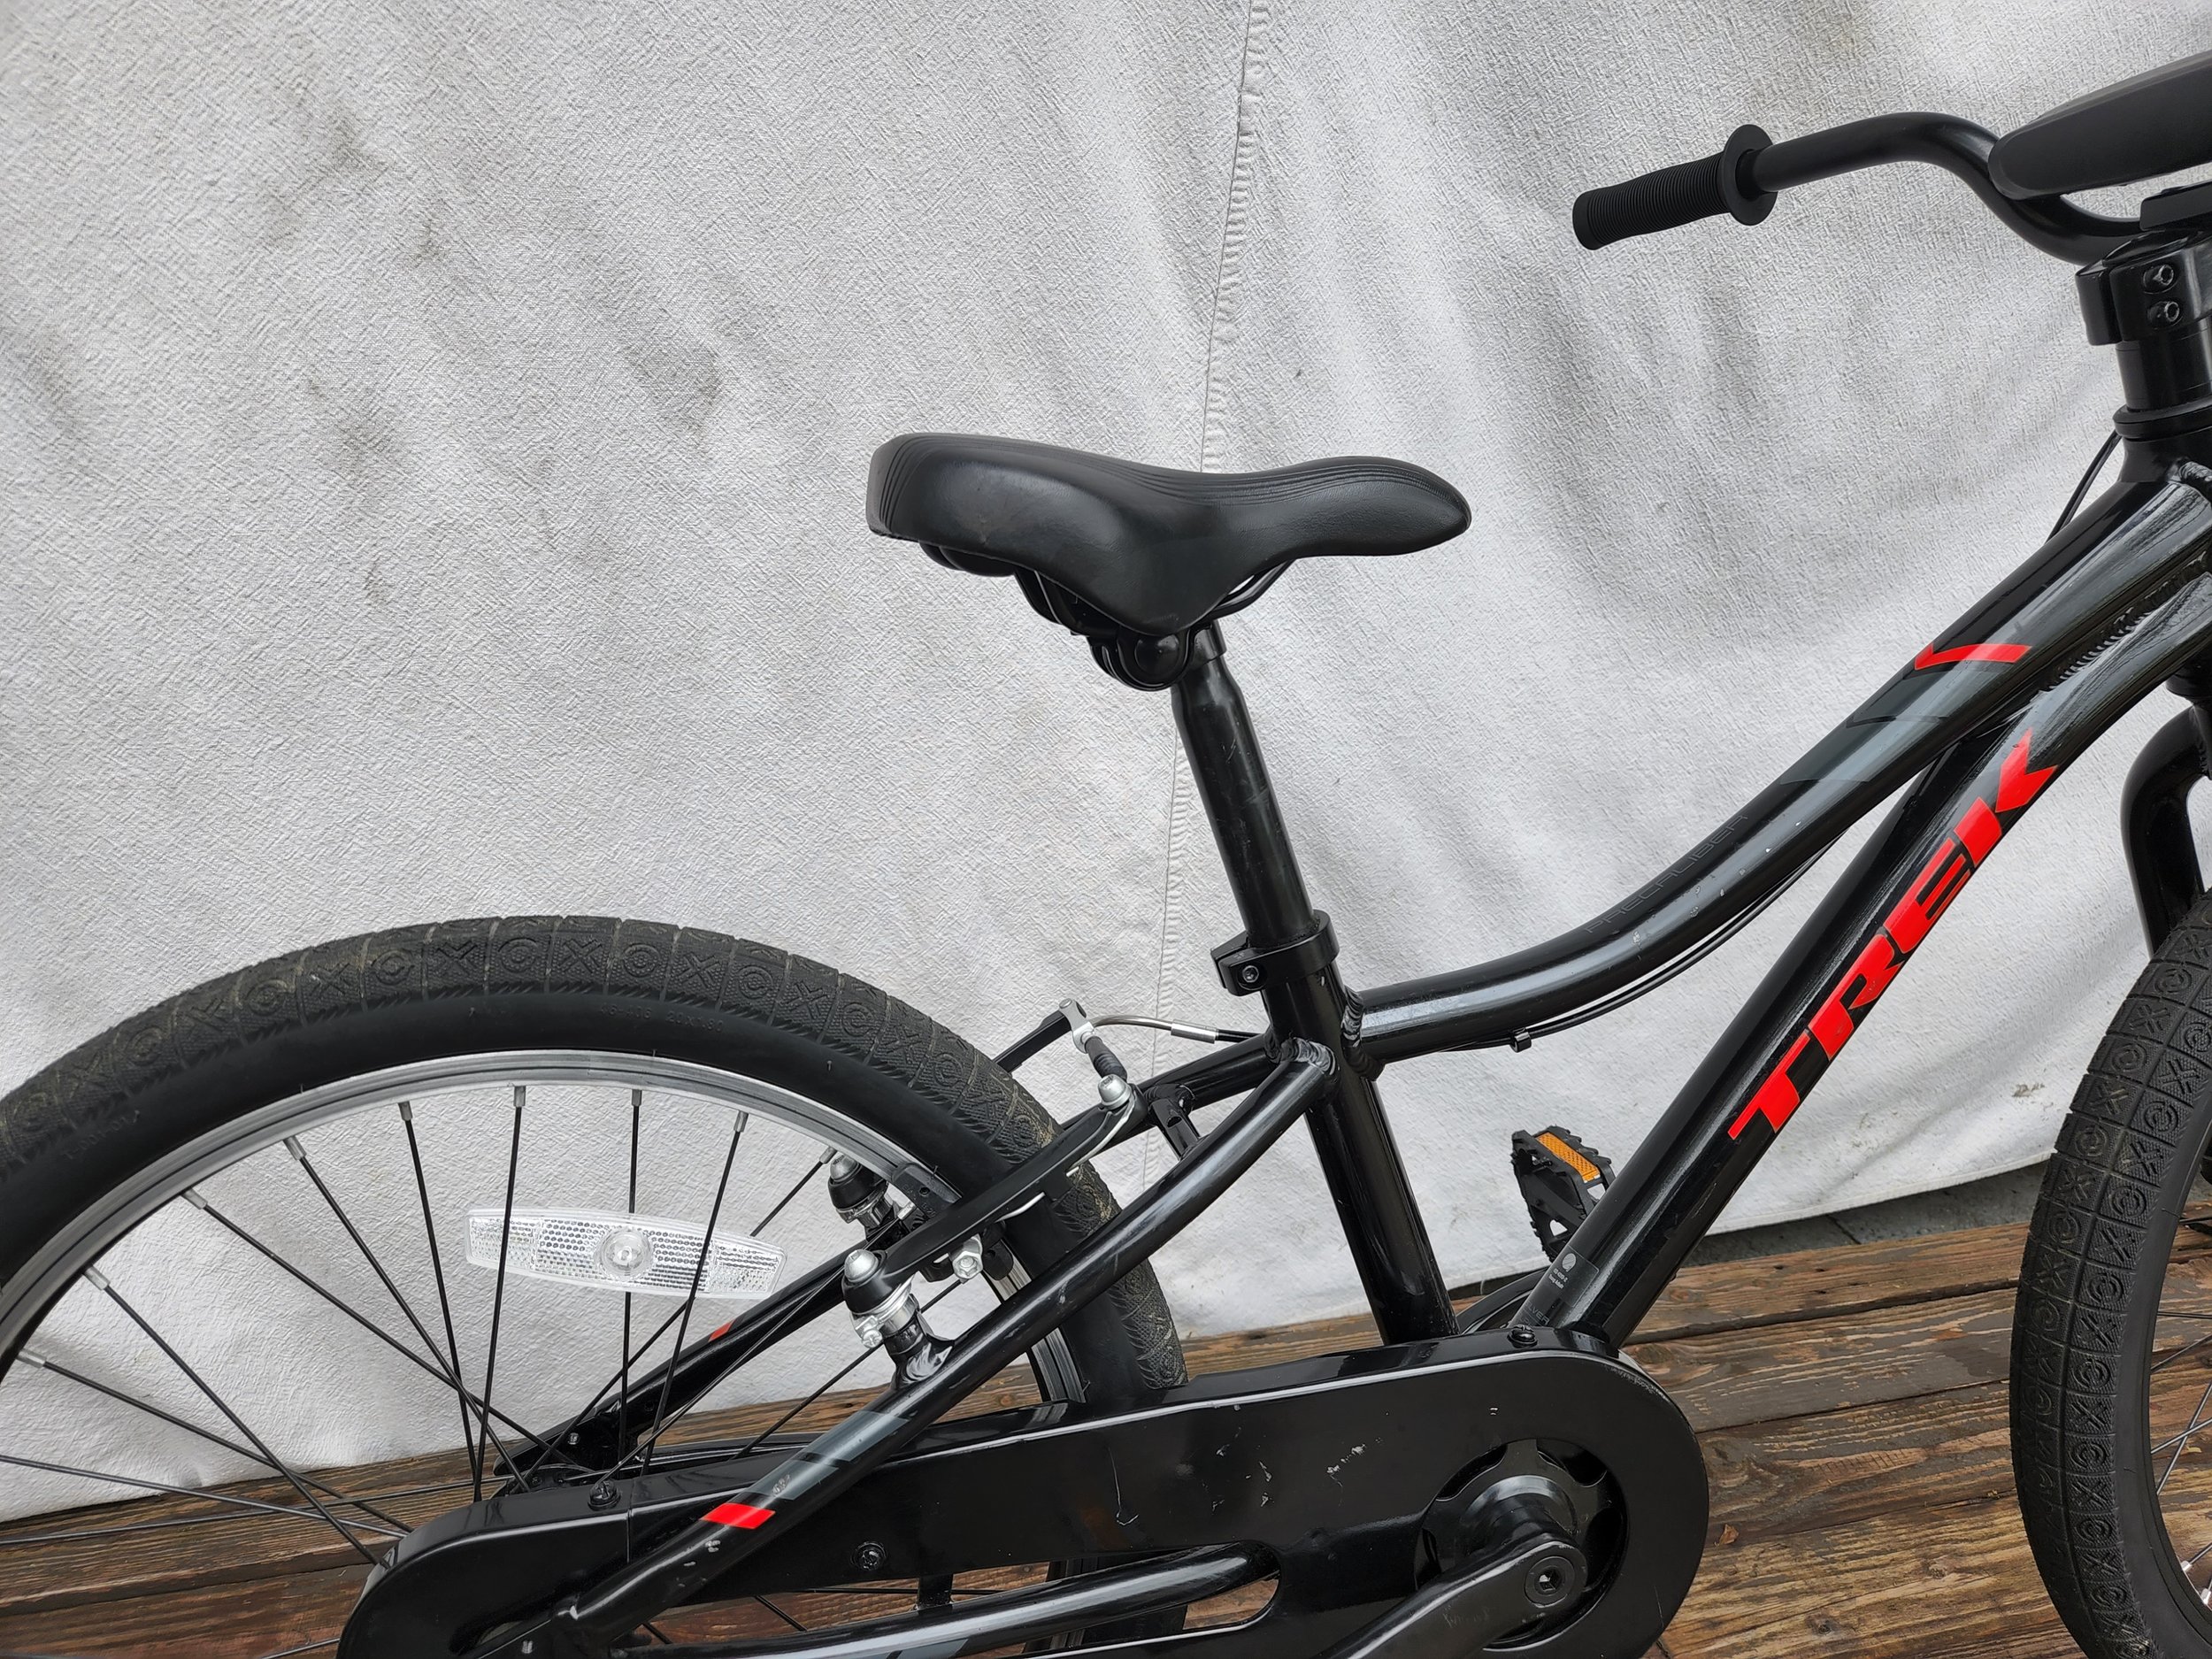 MidGard Pedali bici alluminio bici per MTB City Bike Trekking BMX Freeride ecc.